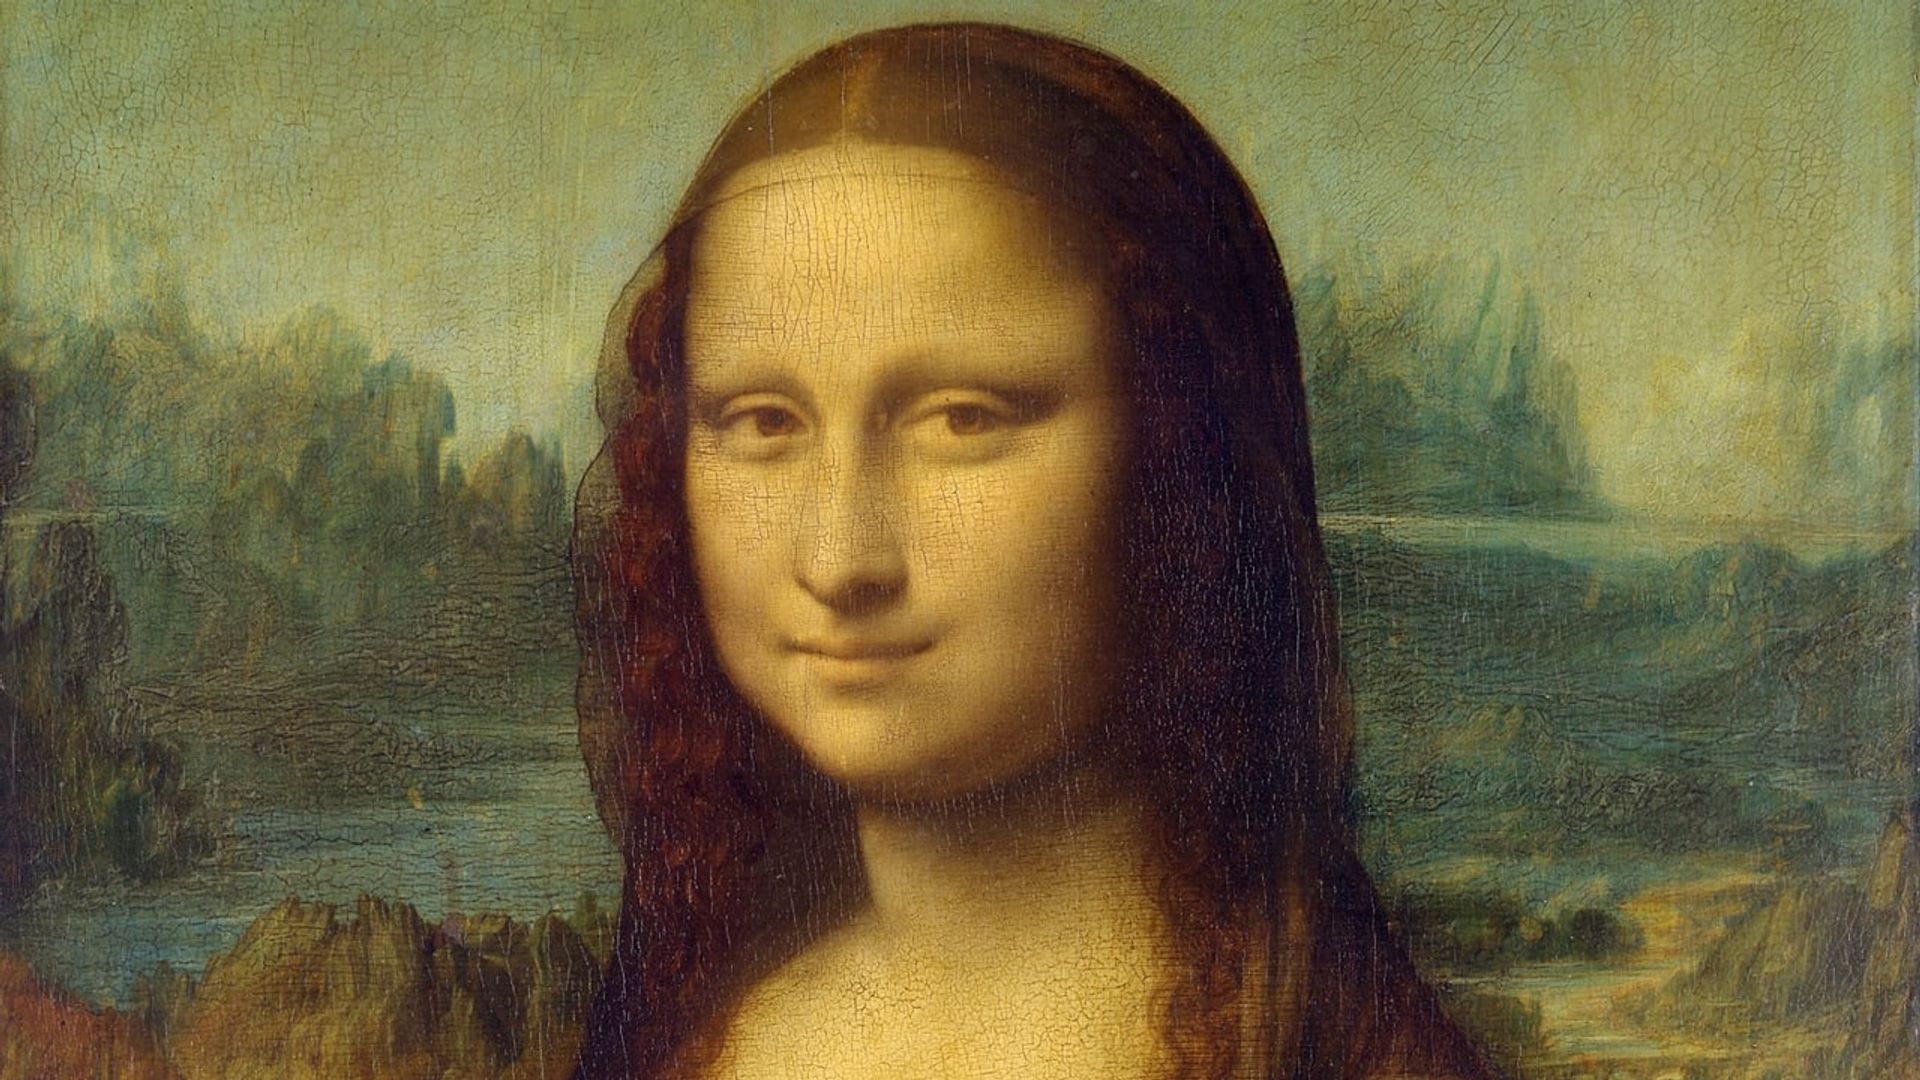 Leonardo: The Works background